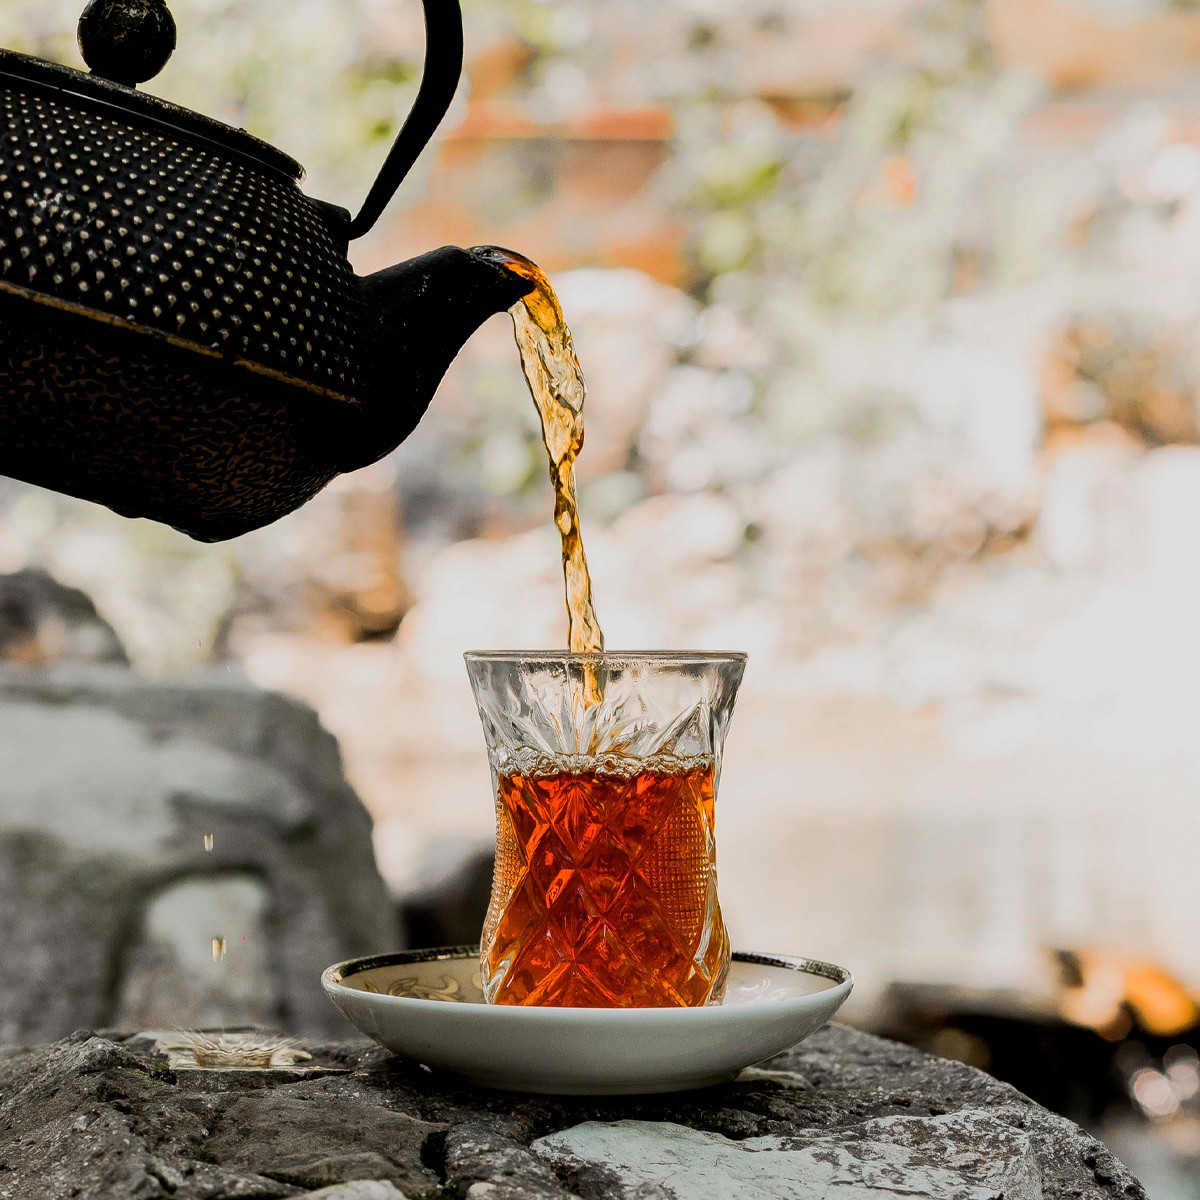 Chá de Gervão - Stachytarpheta Cayennensis - 100g